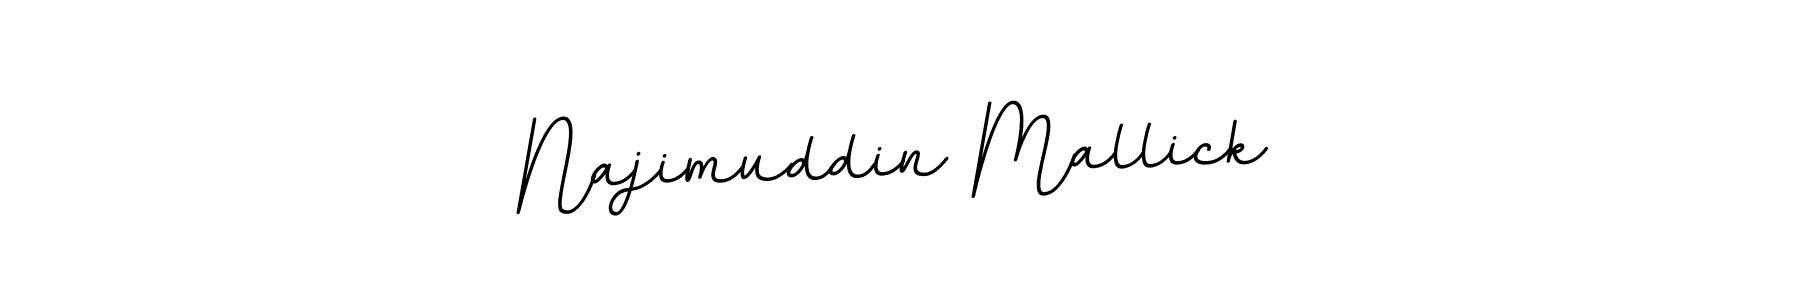 How to Draw Najimuddin Mallick signature style? BallpointsItalic-DORy9 is a latest design signature styles for name Najimuddin Mallick. Najimuddin Mallick signature style 11 images and pictures png